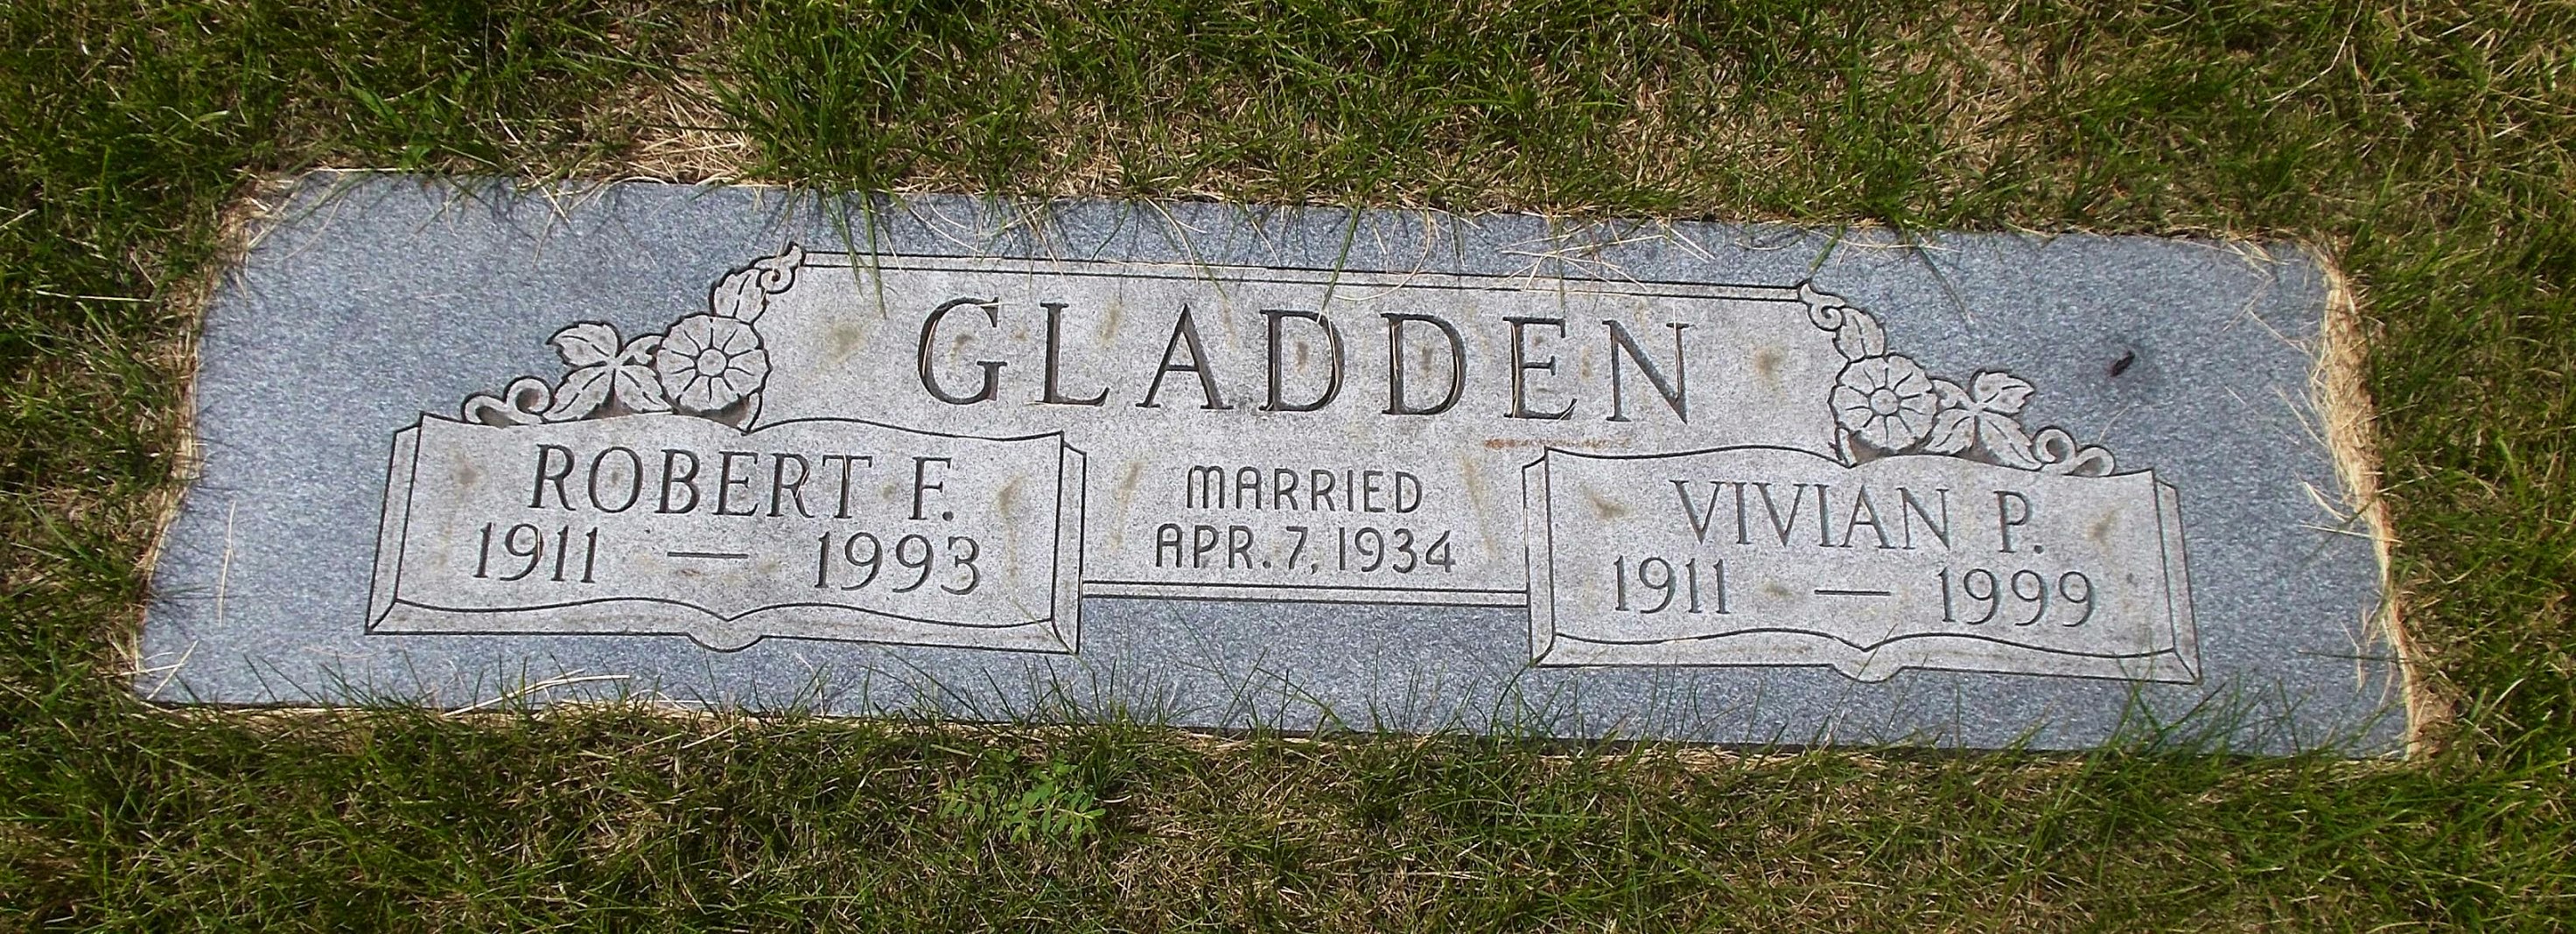 Robert F Gladden